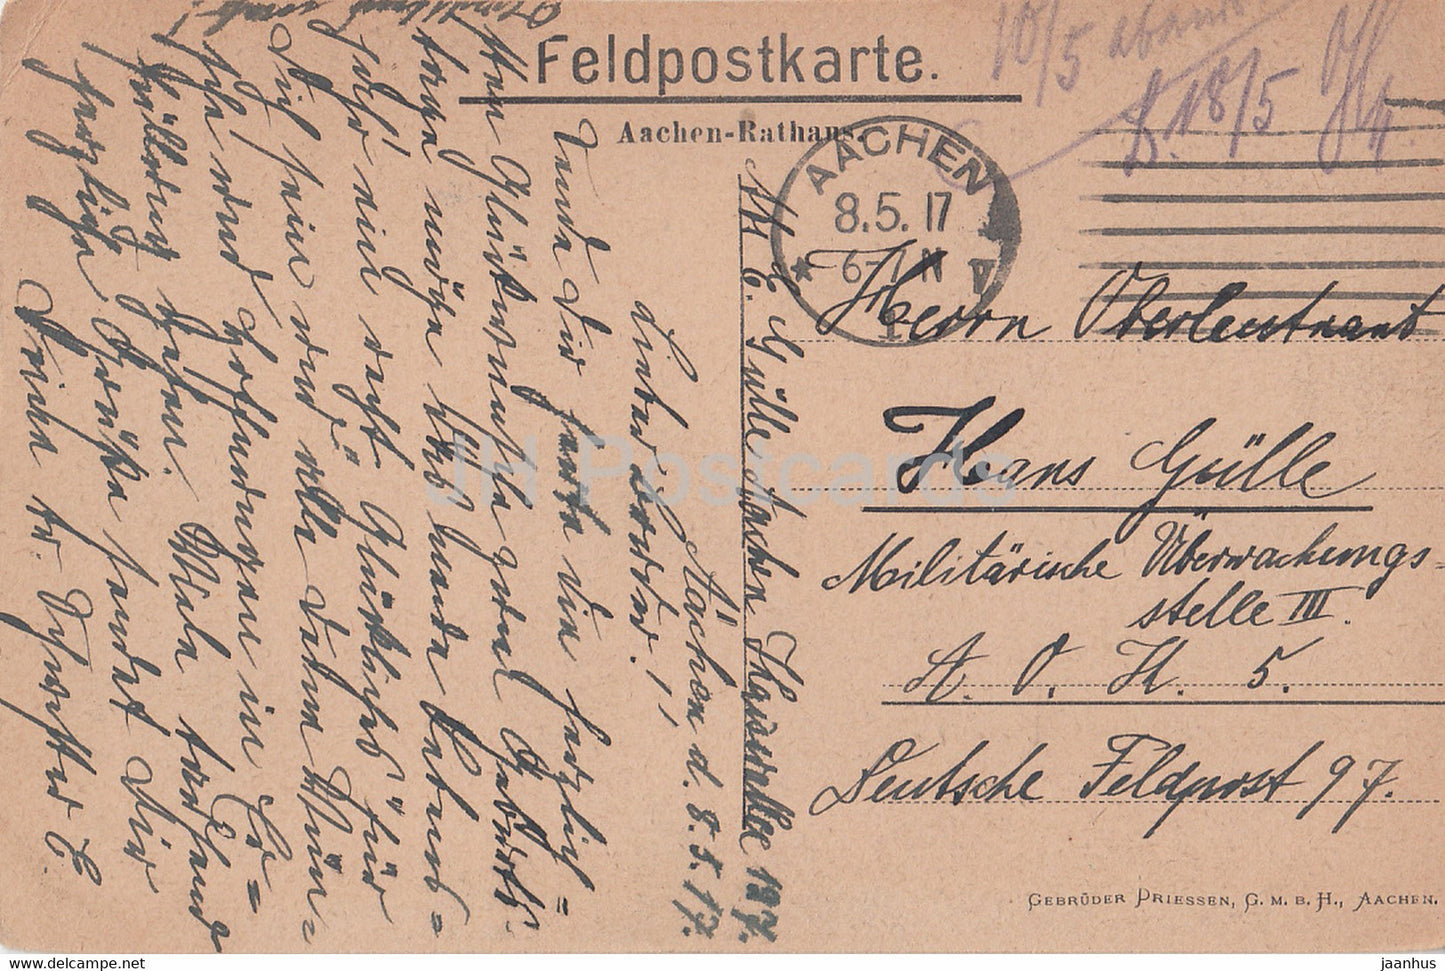 Aachen - Rathaus - Feldpostkarte - 2200 - old postcard - 1917 - Germany - used